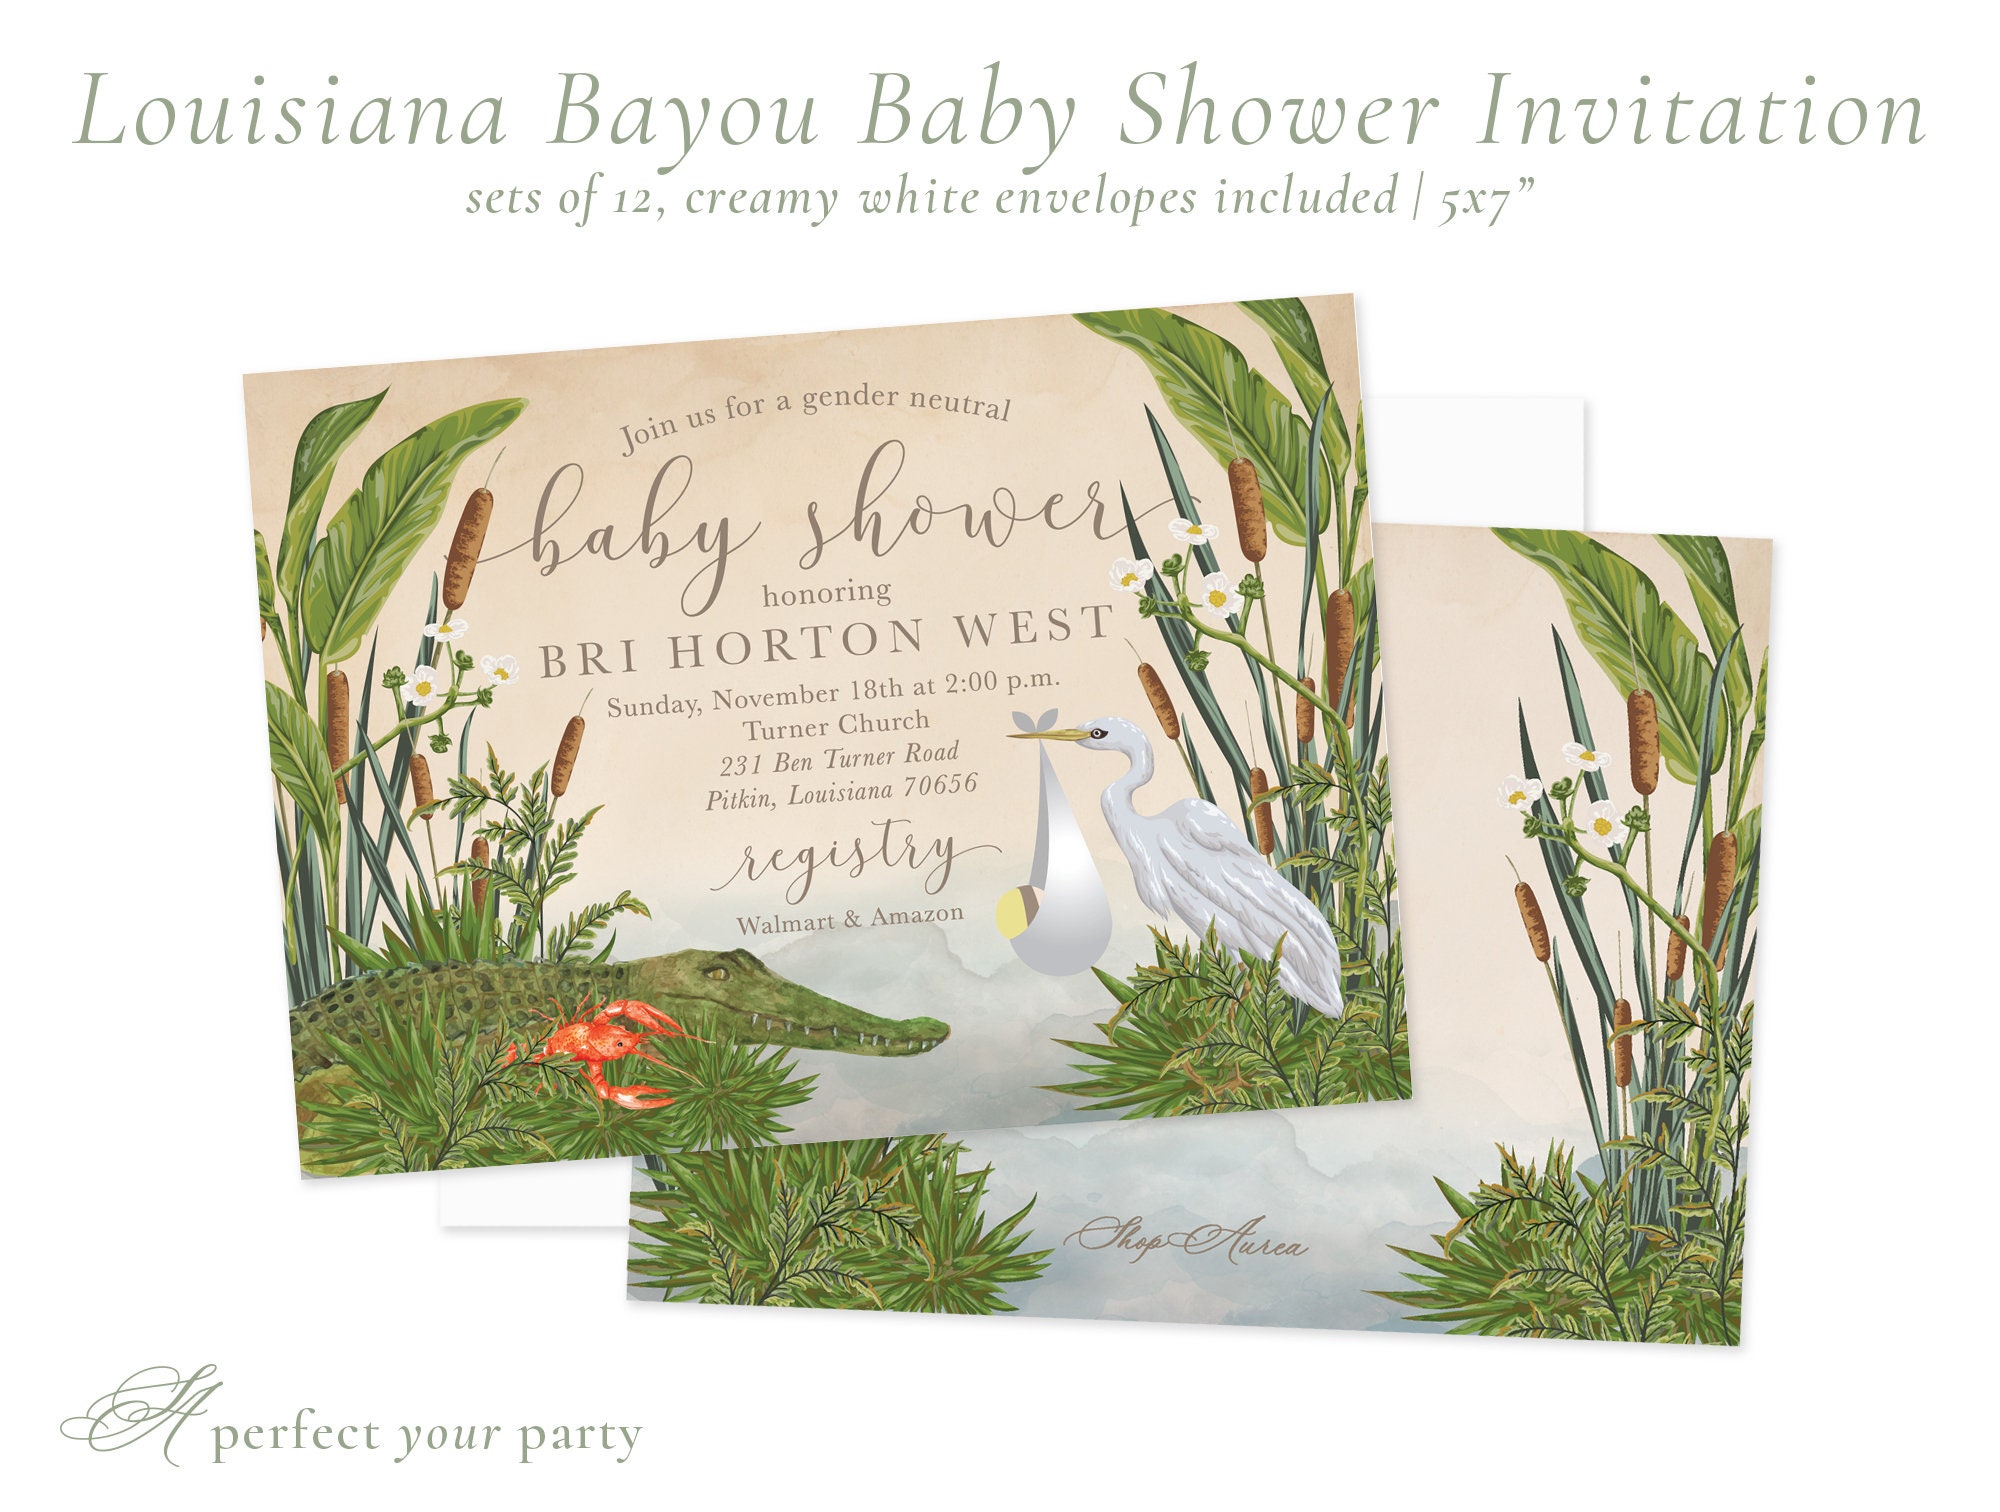 Louisiana Bayou Baby Shower Invitation Born on the Bayou Girl Boy Gender  Neutral Sets of 12 Customize Wording 